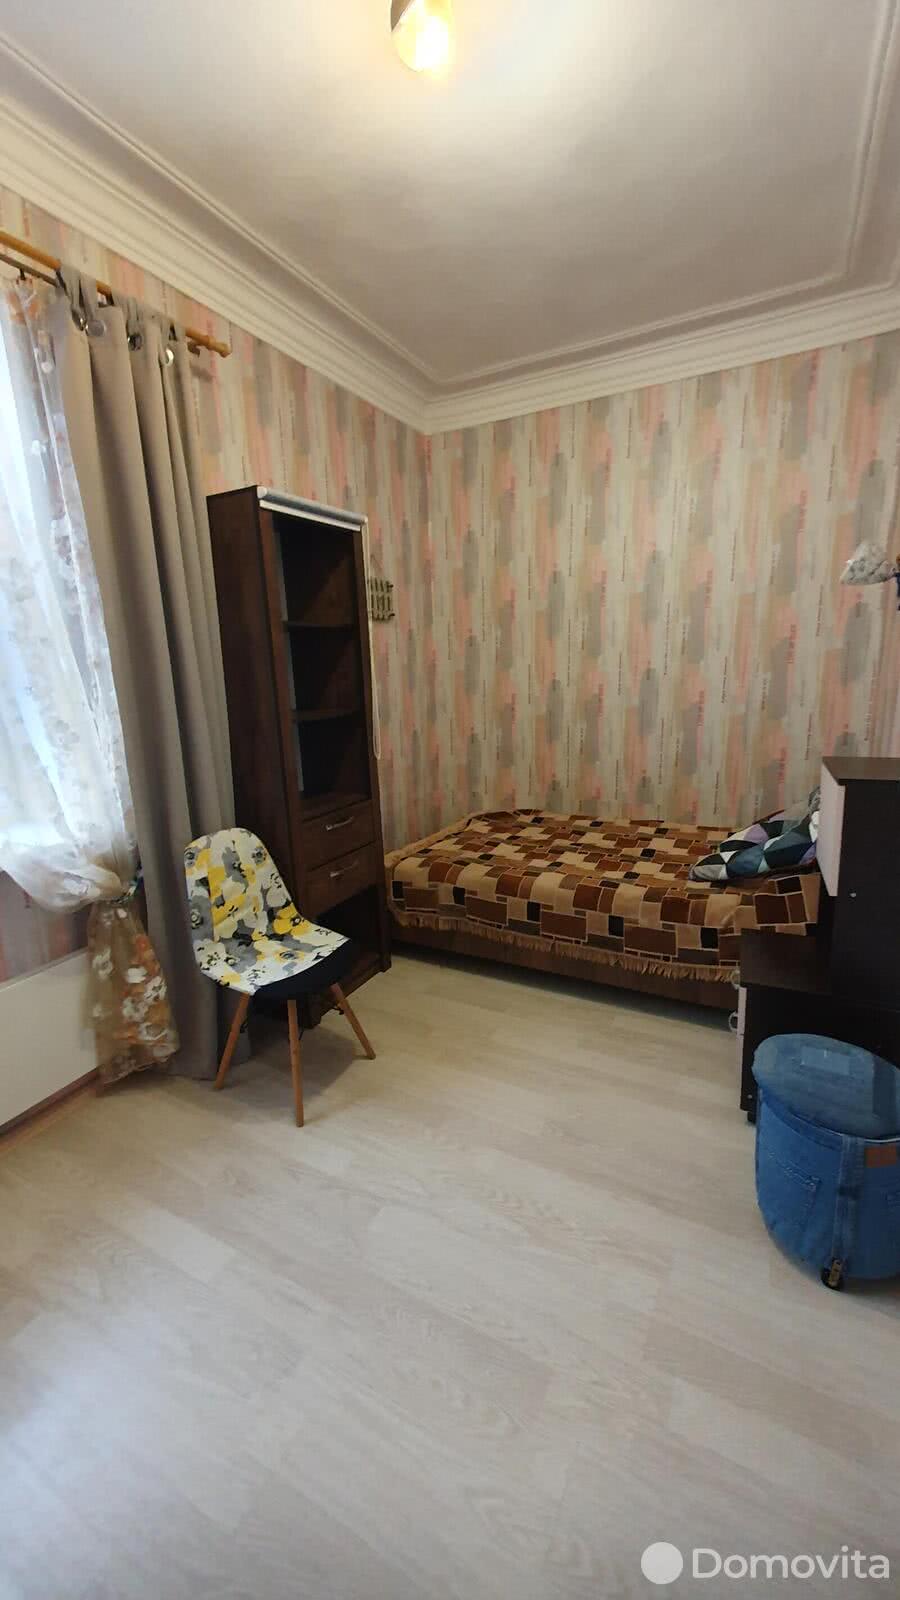 квартира, Борисов, ул. Черняховского, д. 2а, стоимость продажи 97 848 р.